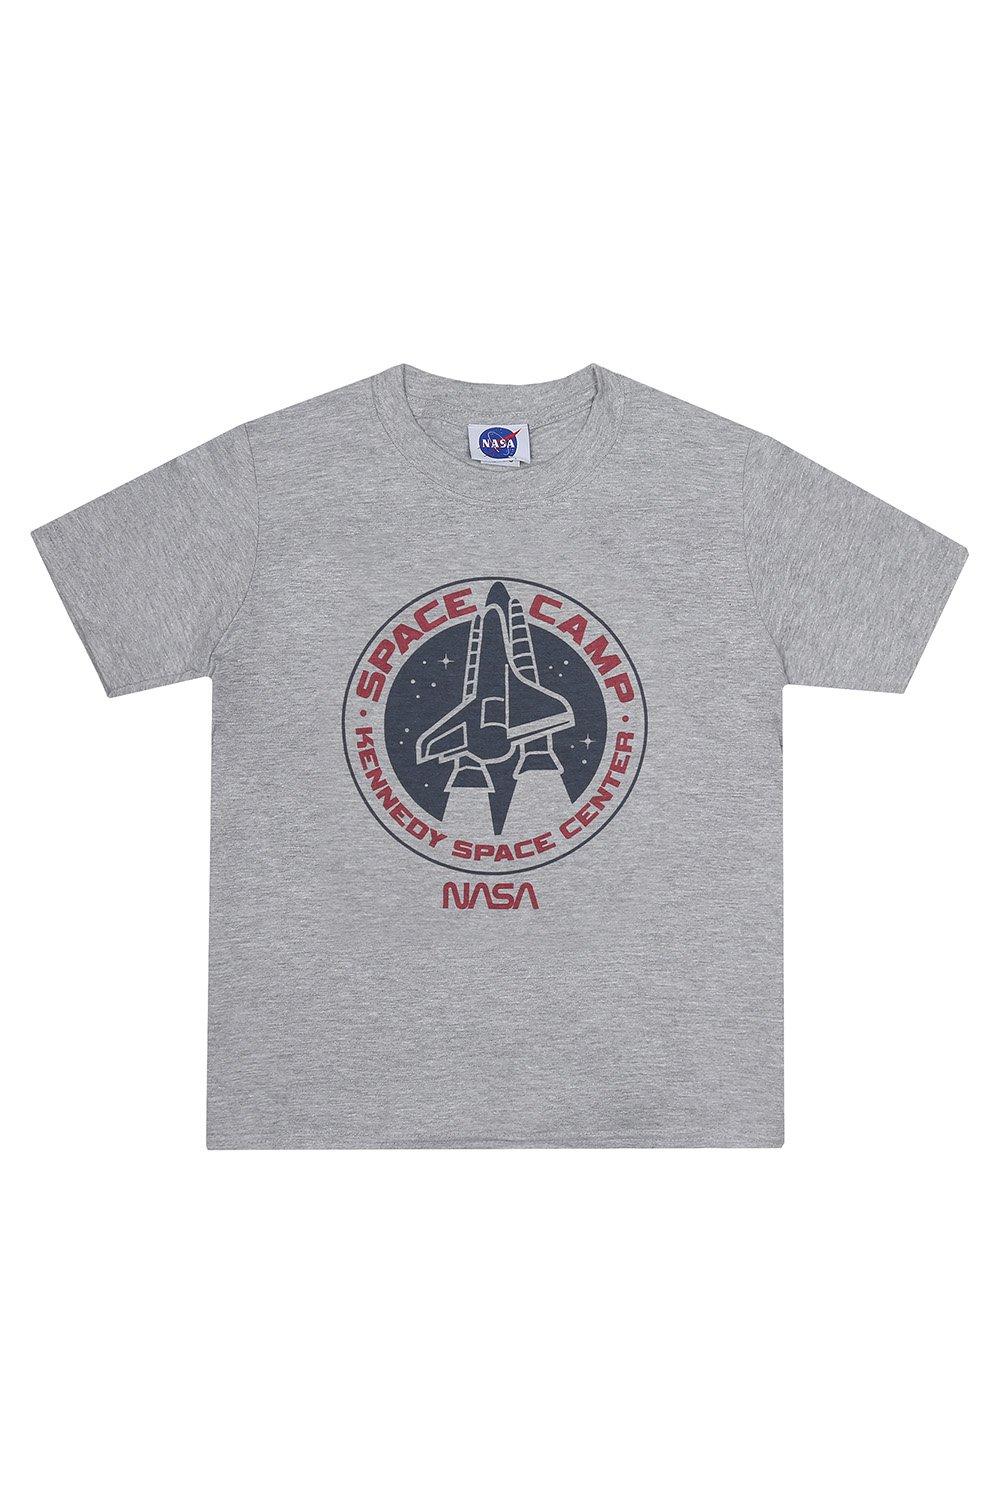 Space Camp Boys Cotton T-Shirt